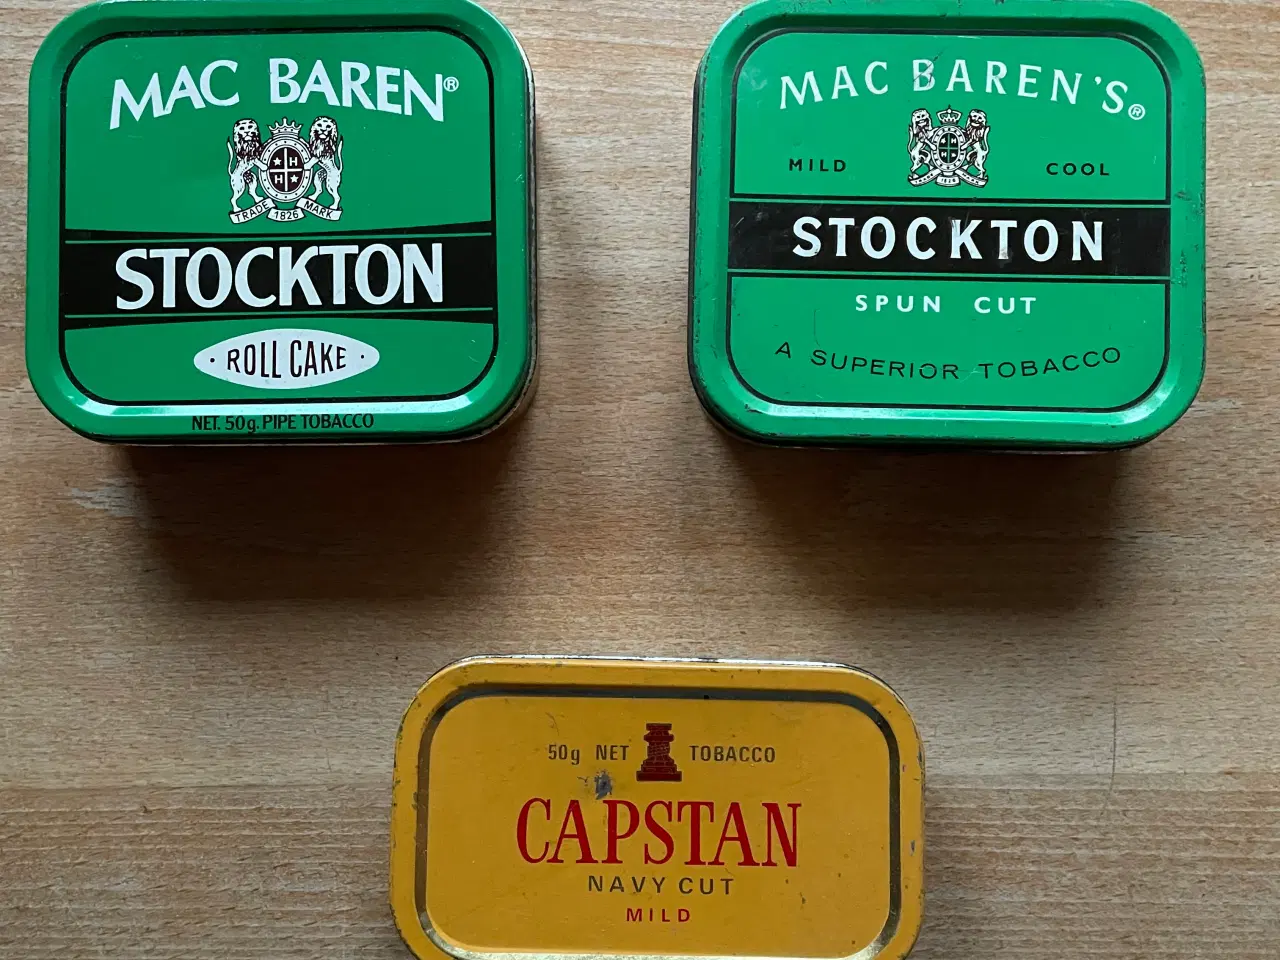 Billede 1 - Tobaksdåser, Mac Baren Stockton, Capstan